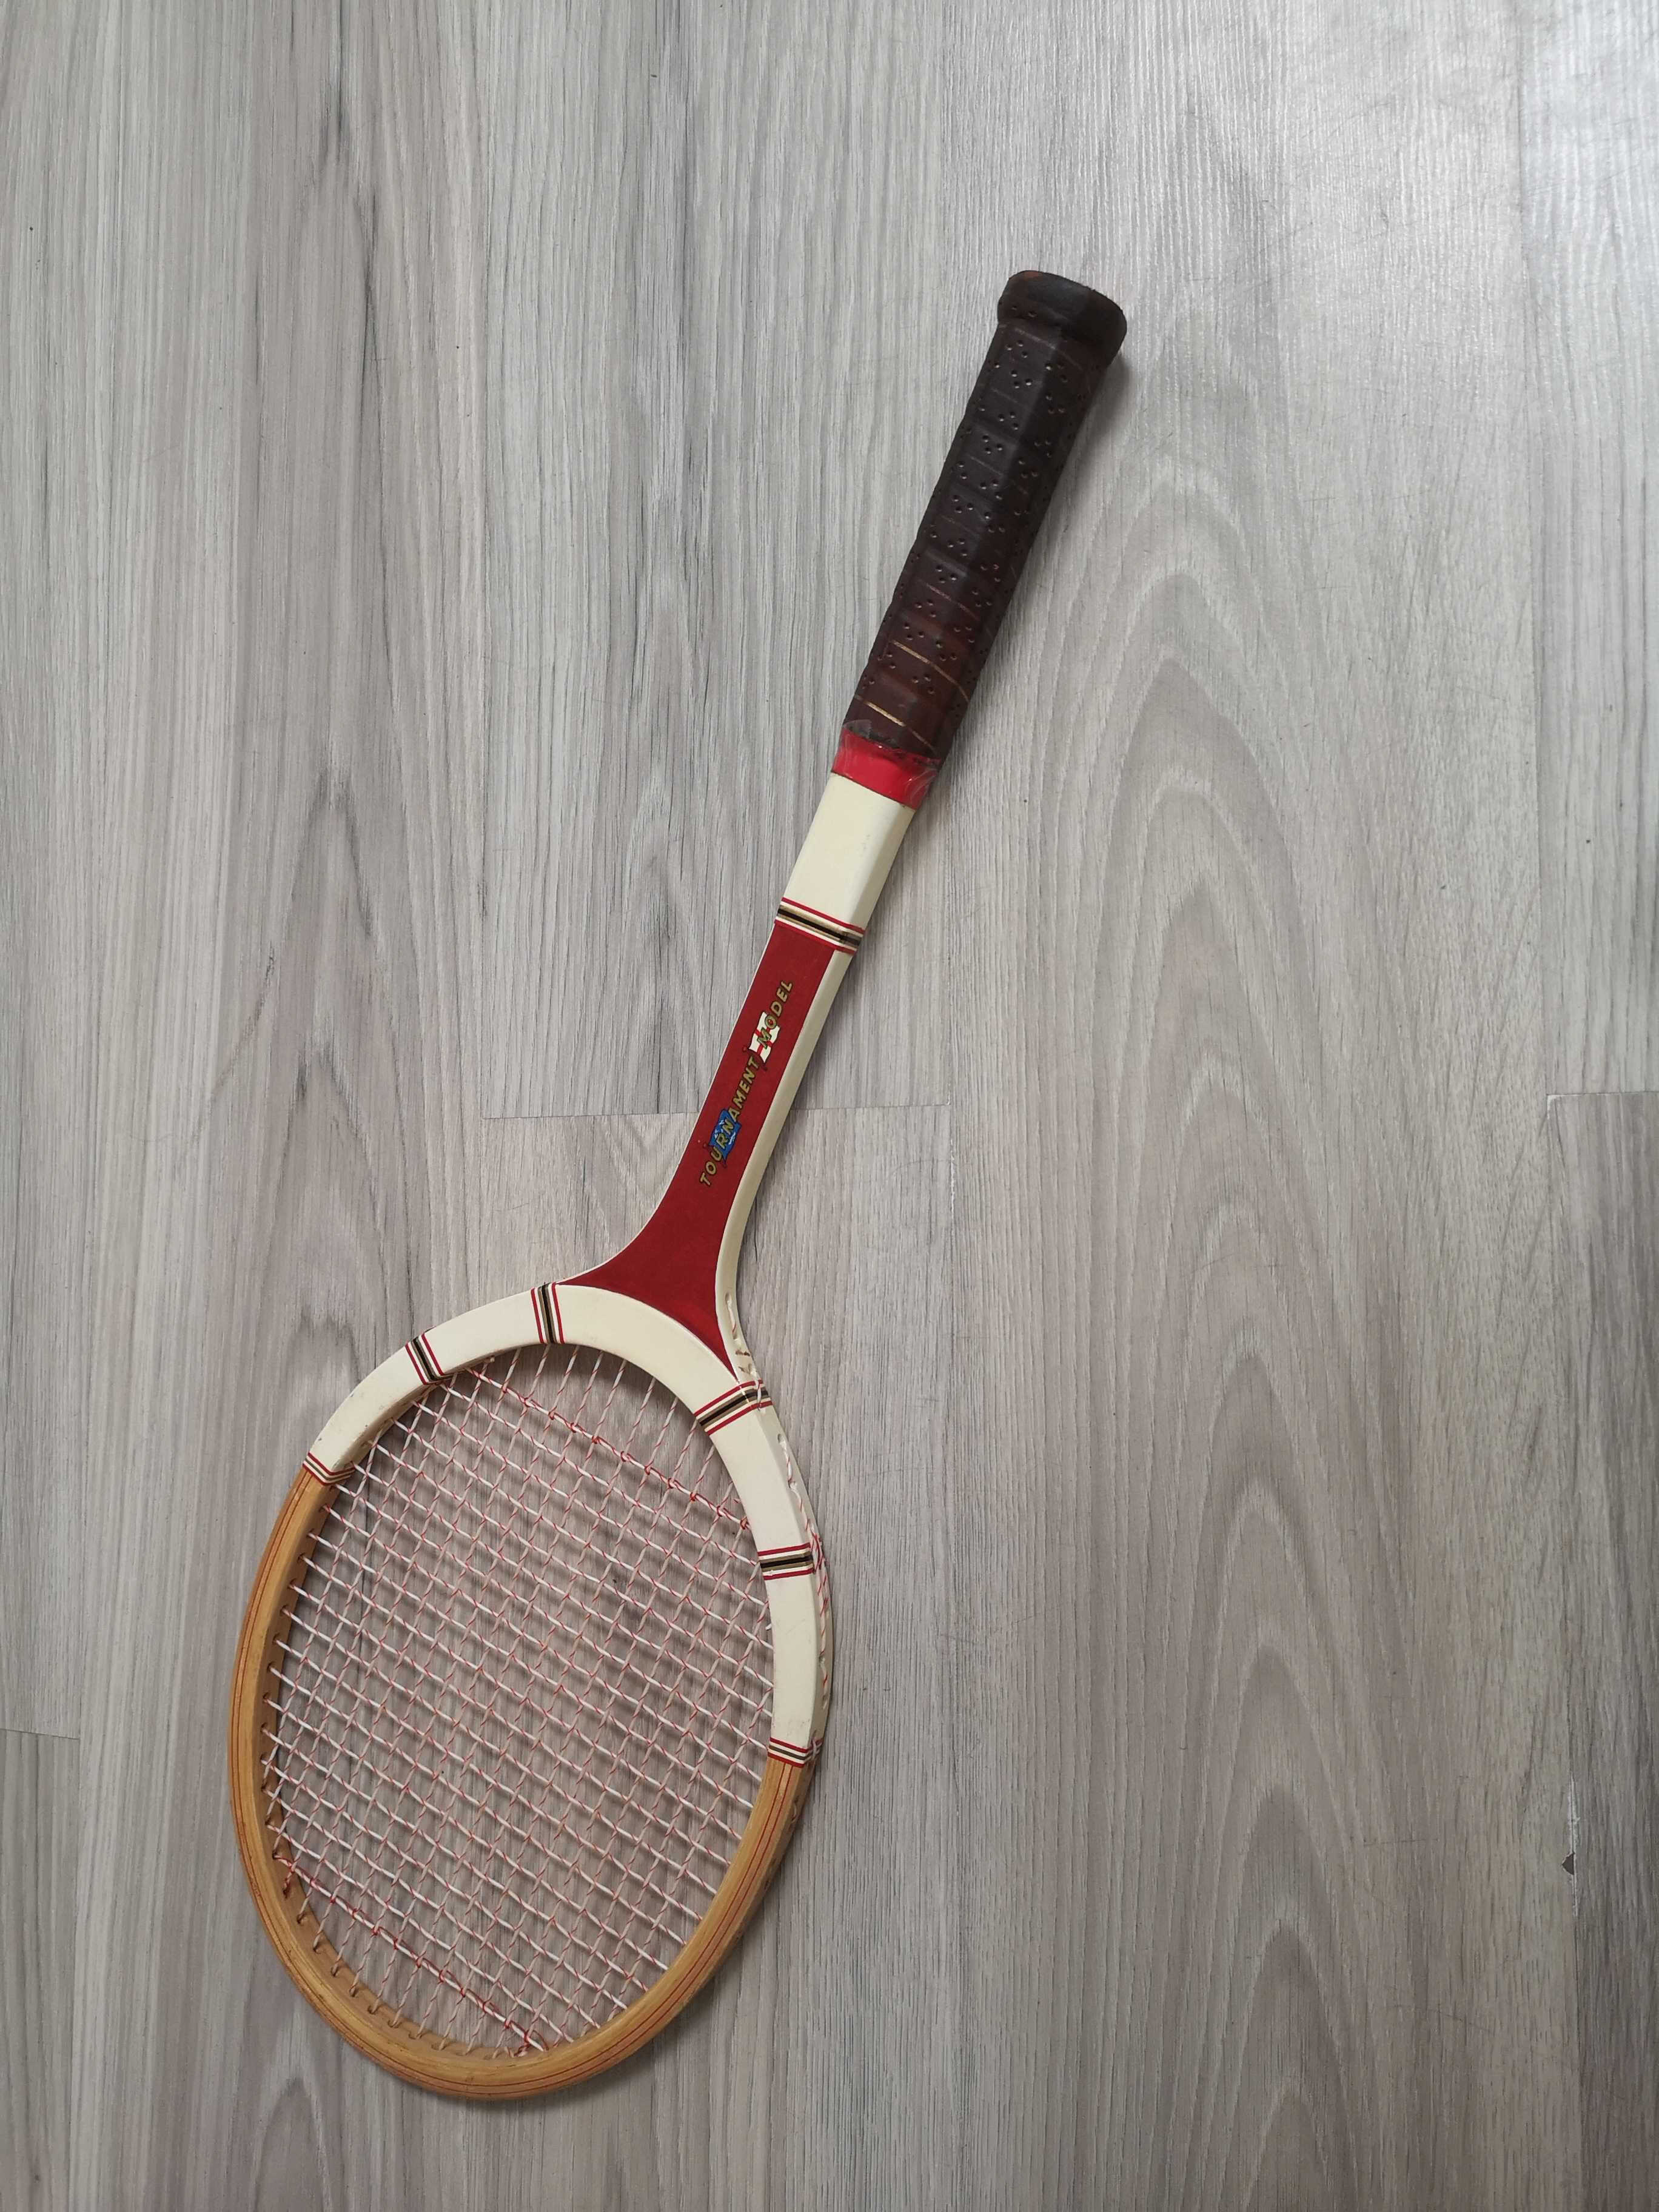 rakieta do tenisa Super MATCH vintage retro drewniana